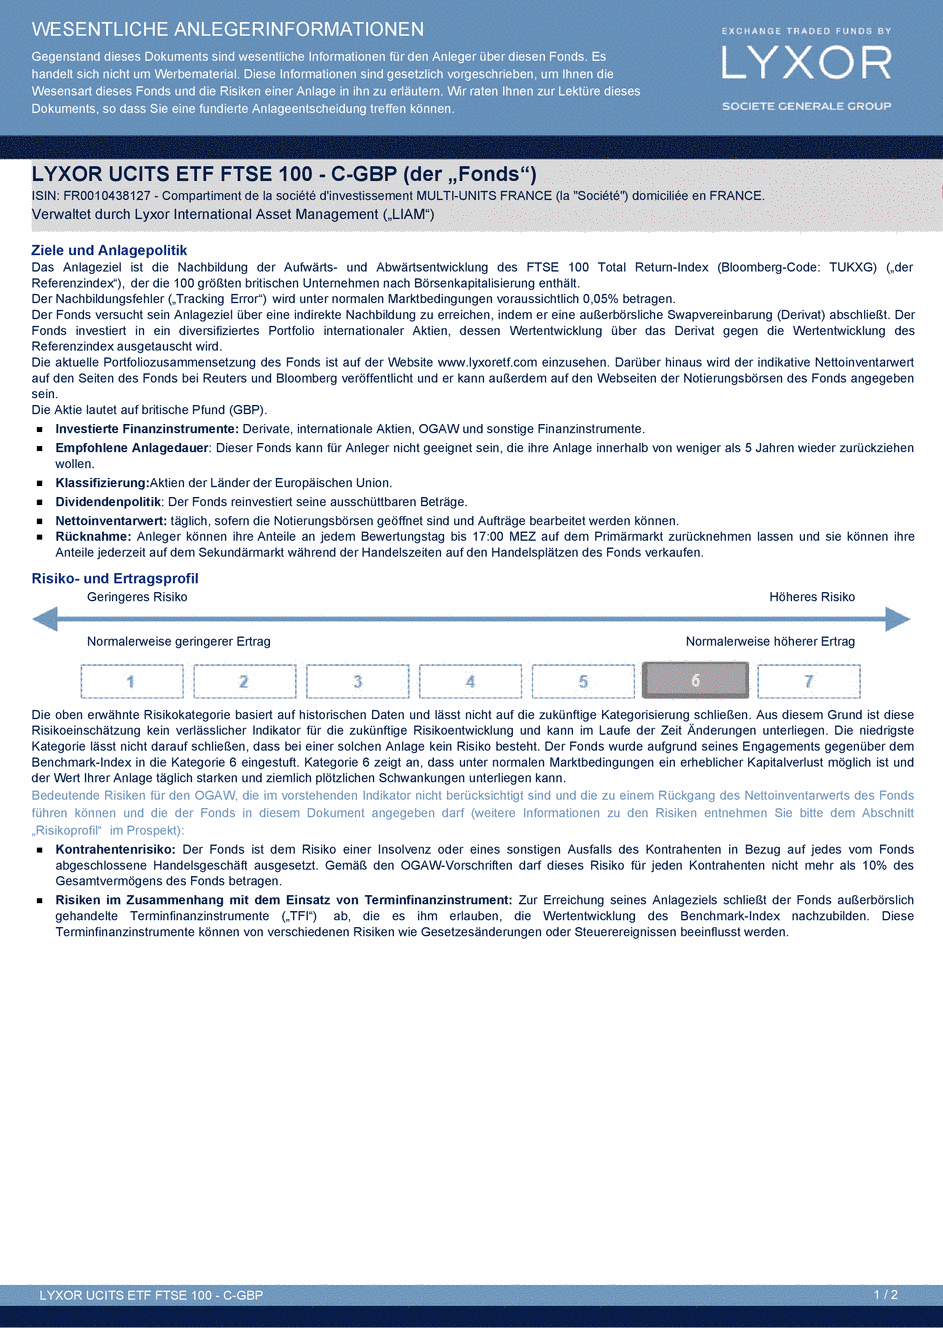 DICI LYXOR UCITS ETF FTSE 100 C-GBP - 15/04/2014 - Allemand